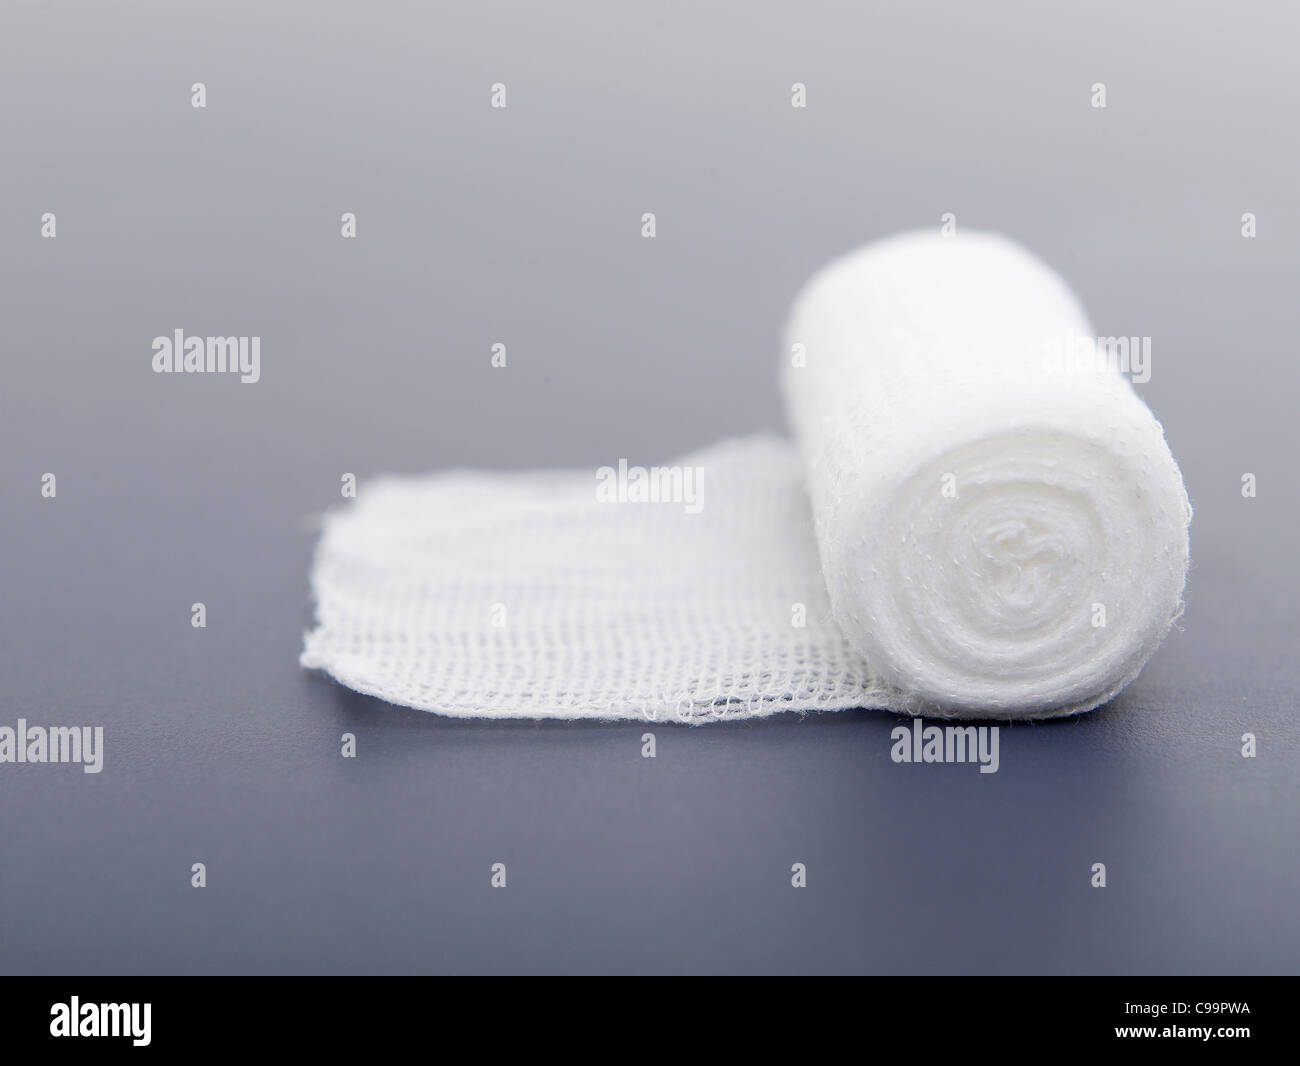 Image result for happy snail bandage